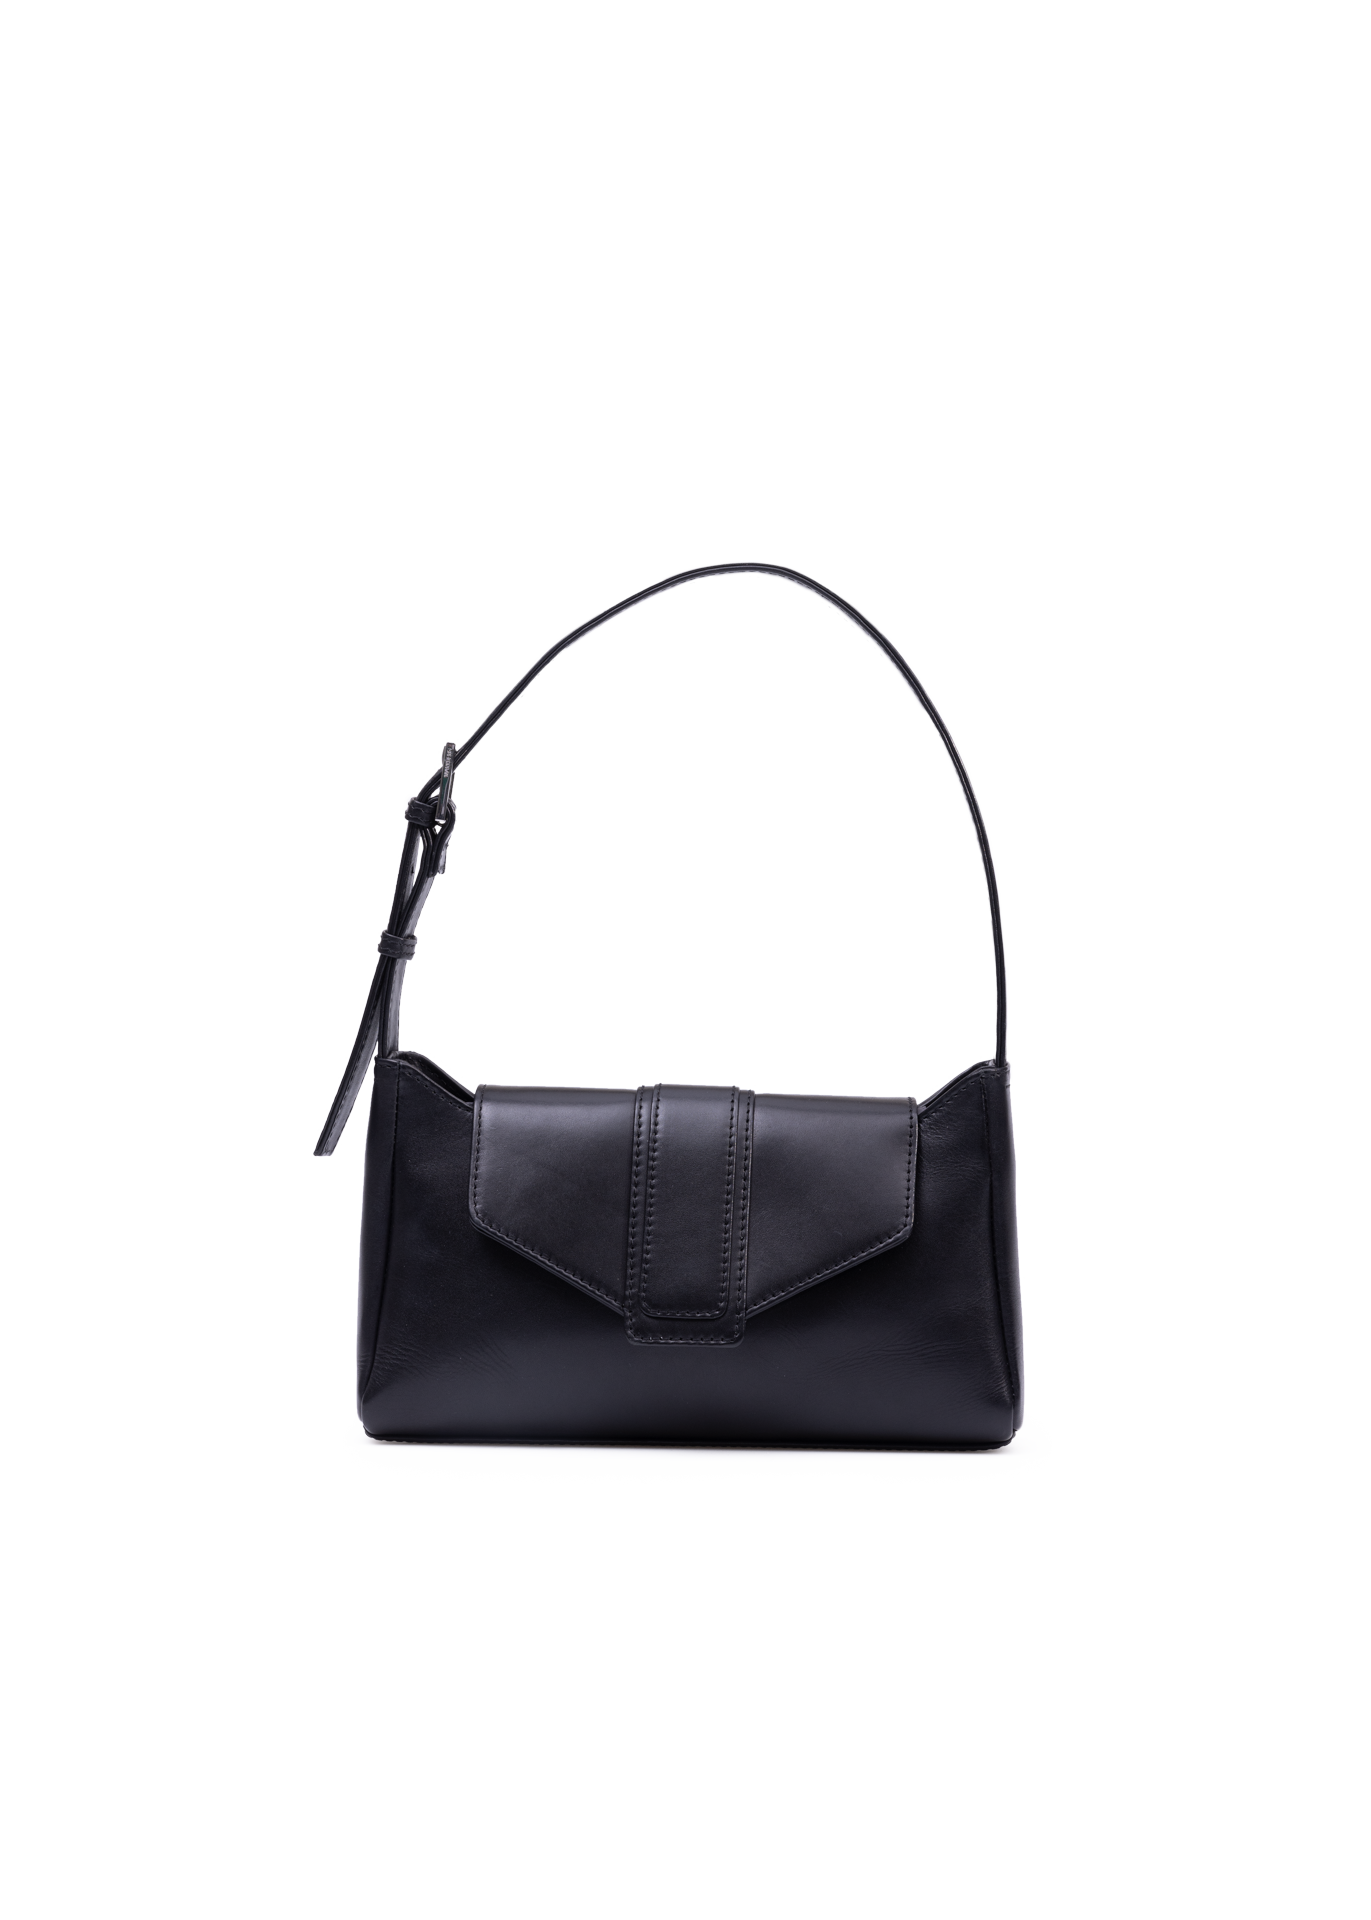 Leather handbag with adjustable strap